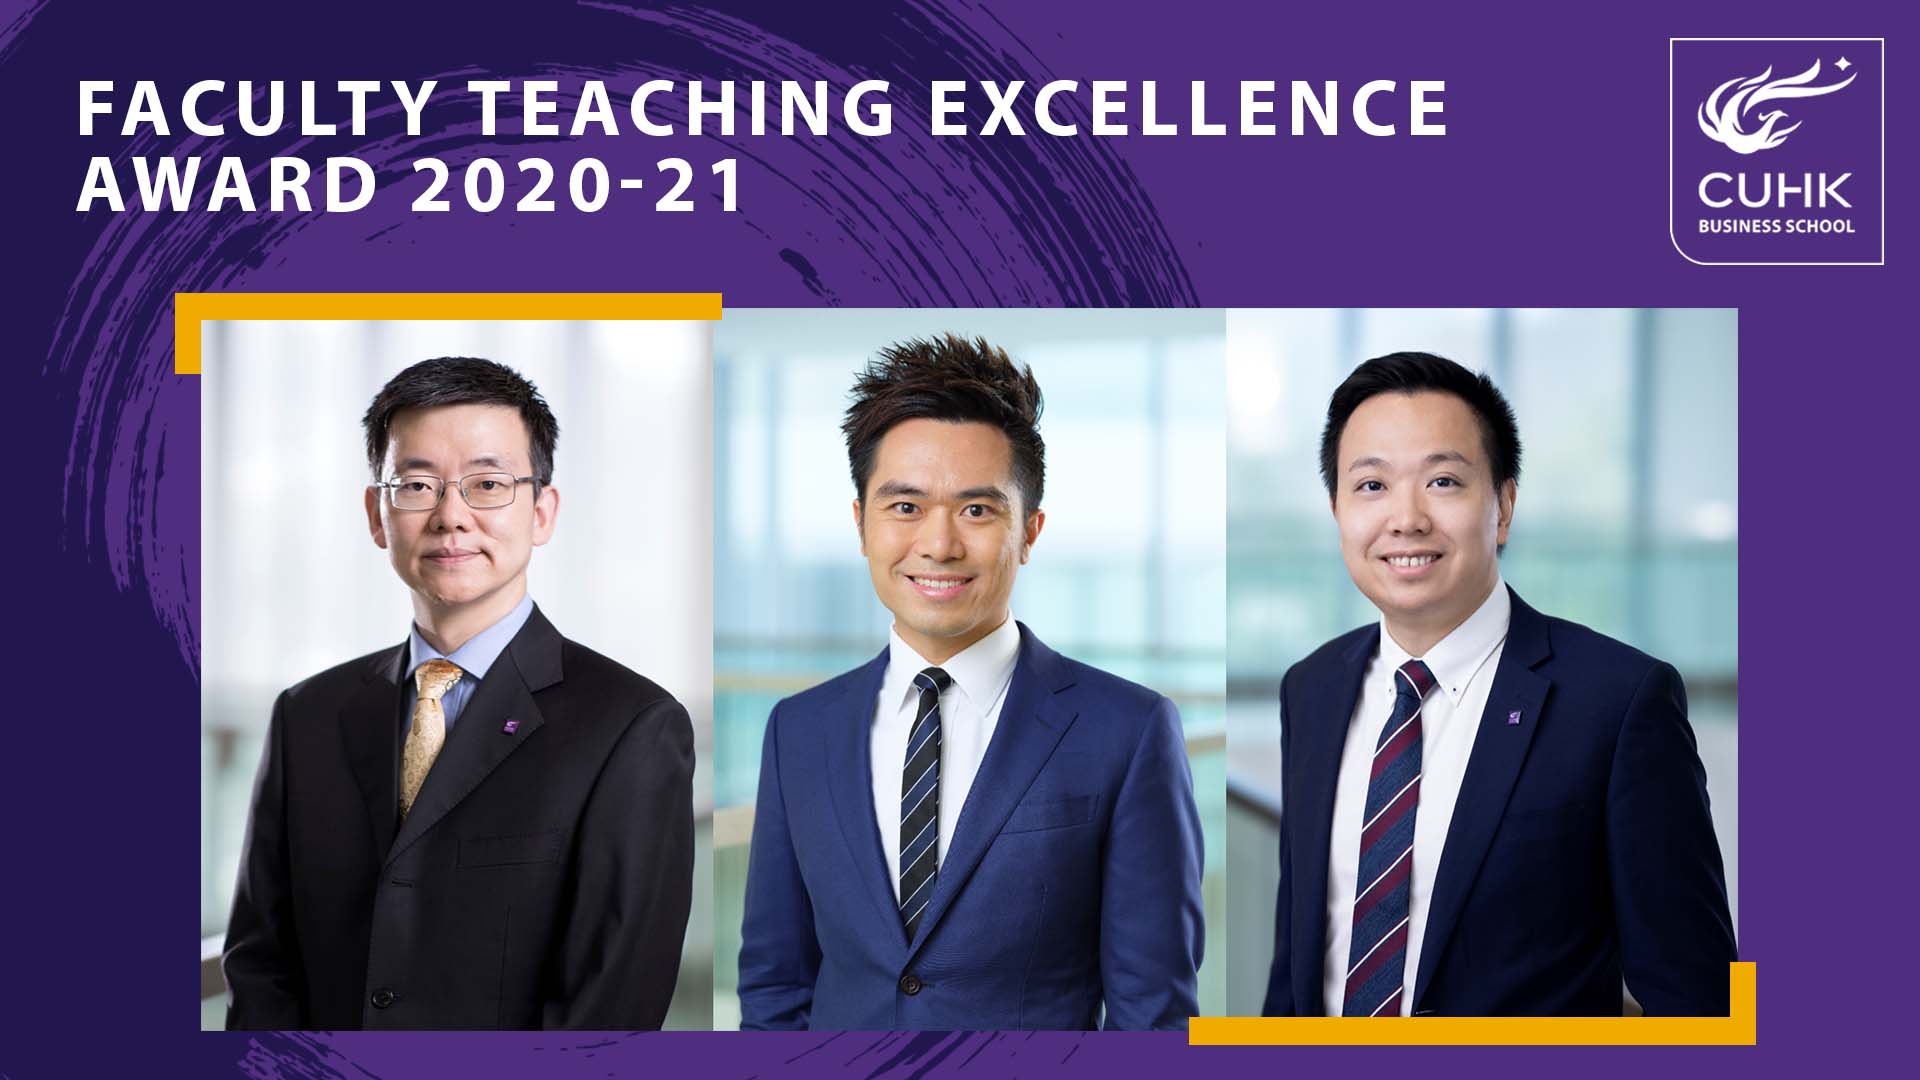 CUHK Business School Announces the Faculty Teaching Excellence Award 2020-21